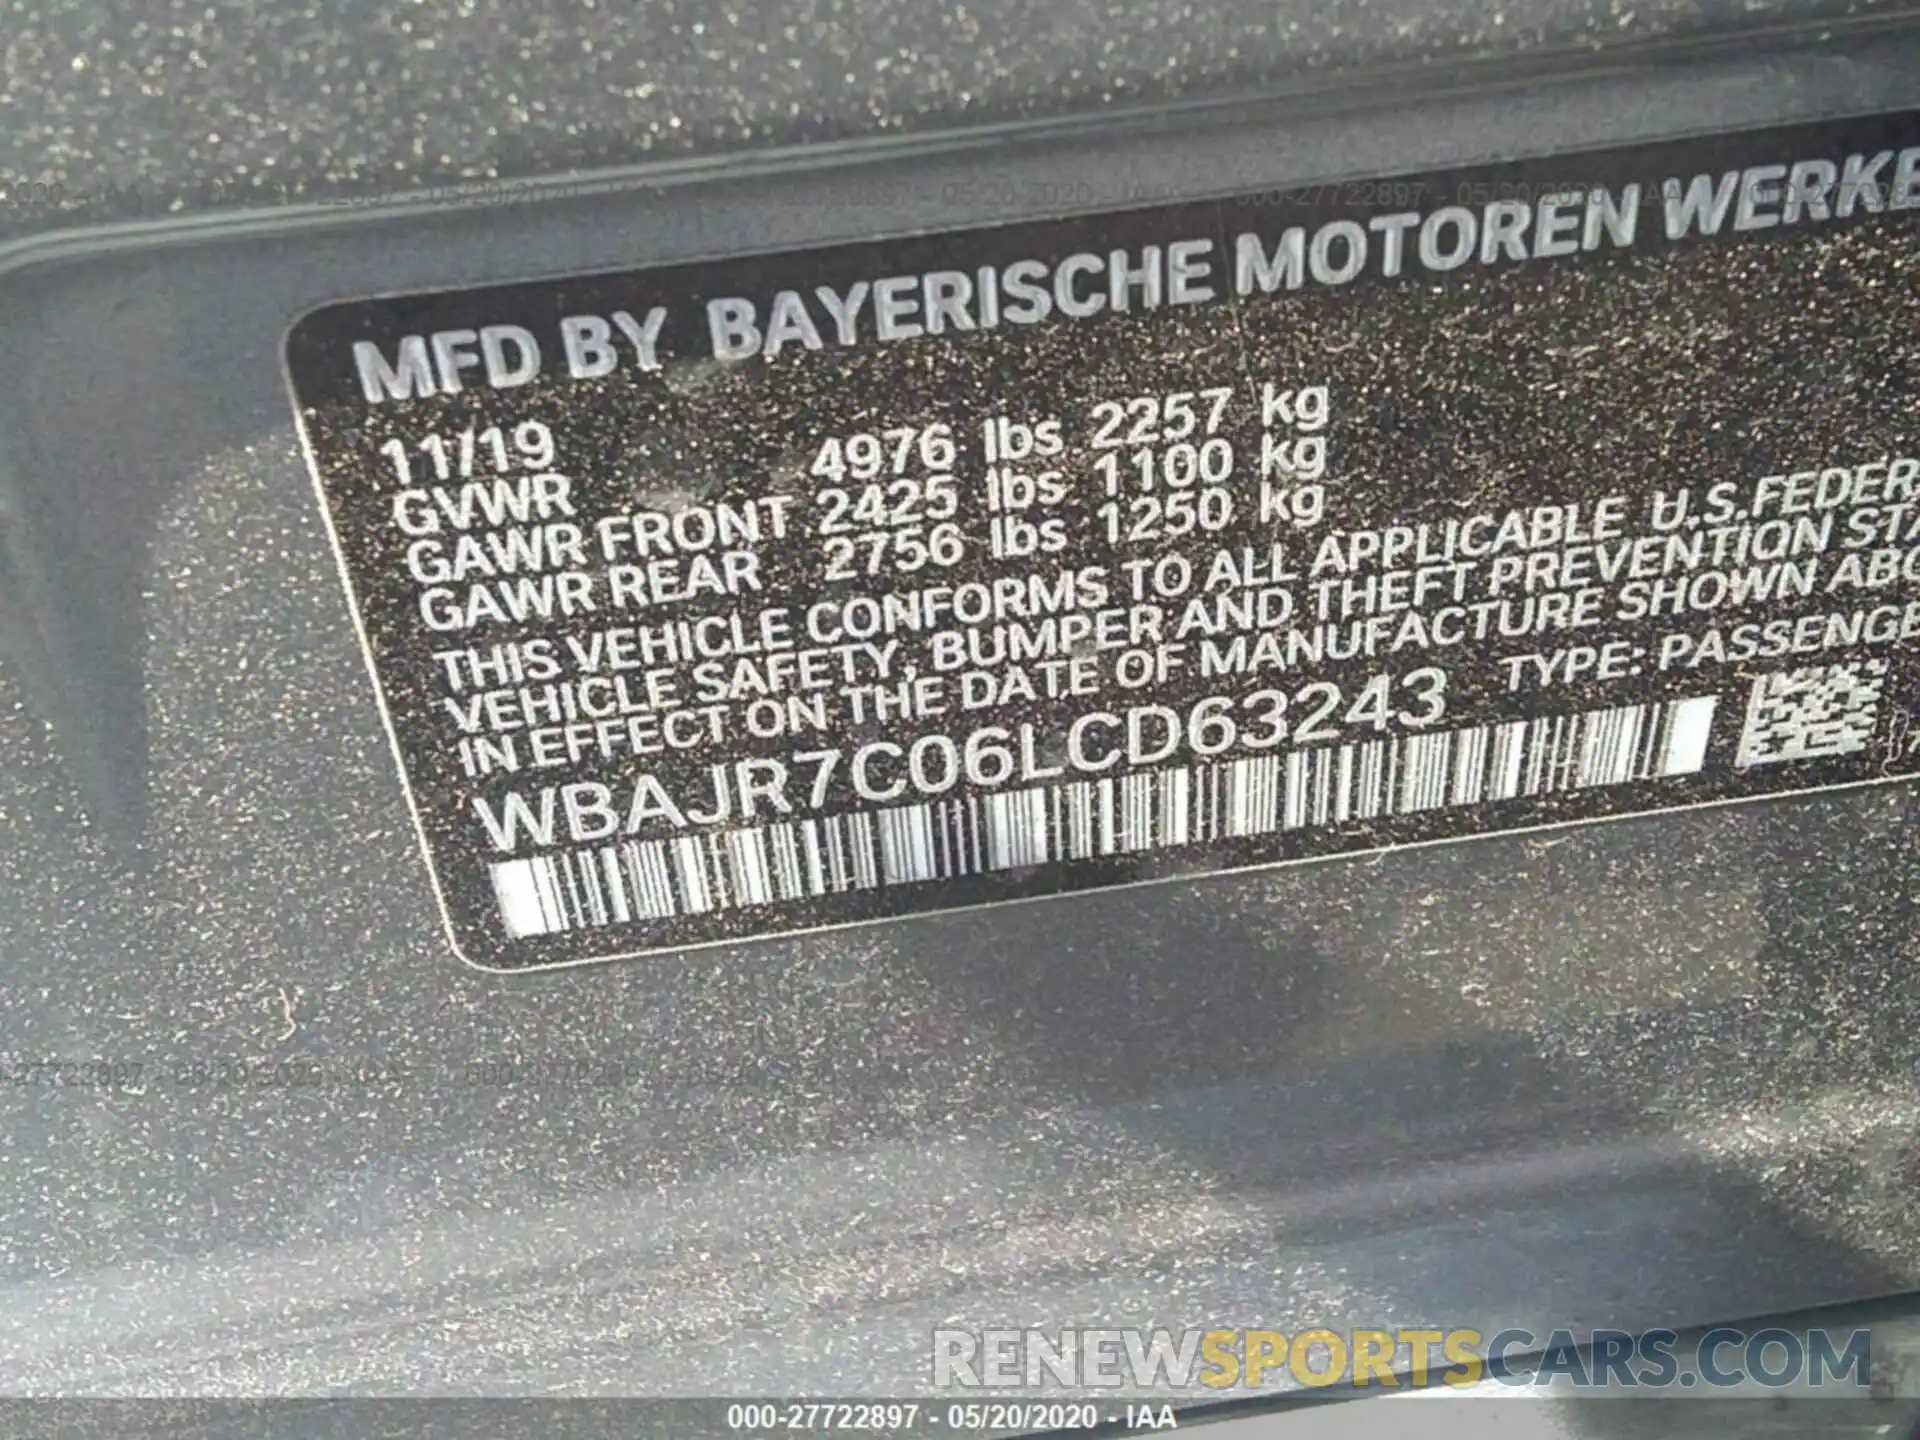 9 Фотография поврежденного автомобиля WBAJR7C06LCD63243 BMW 530 2020